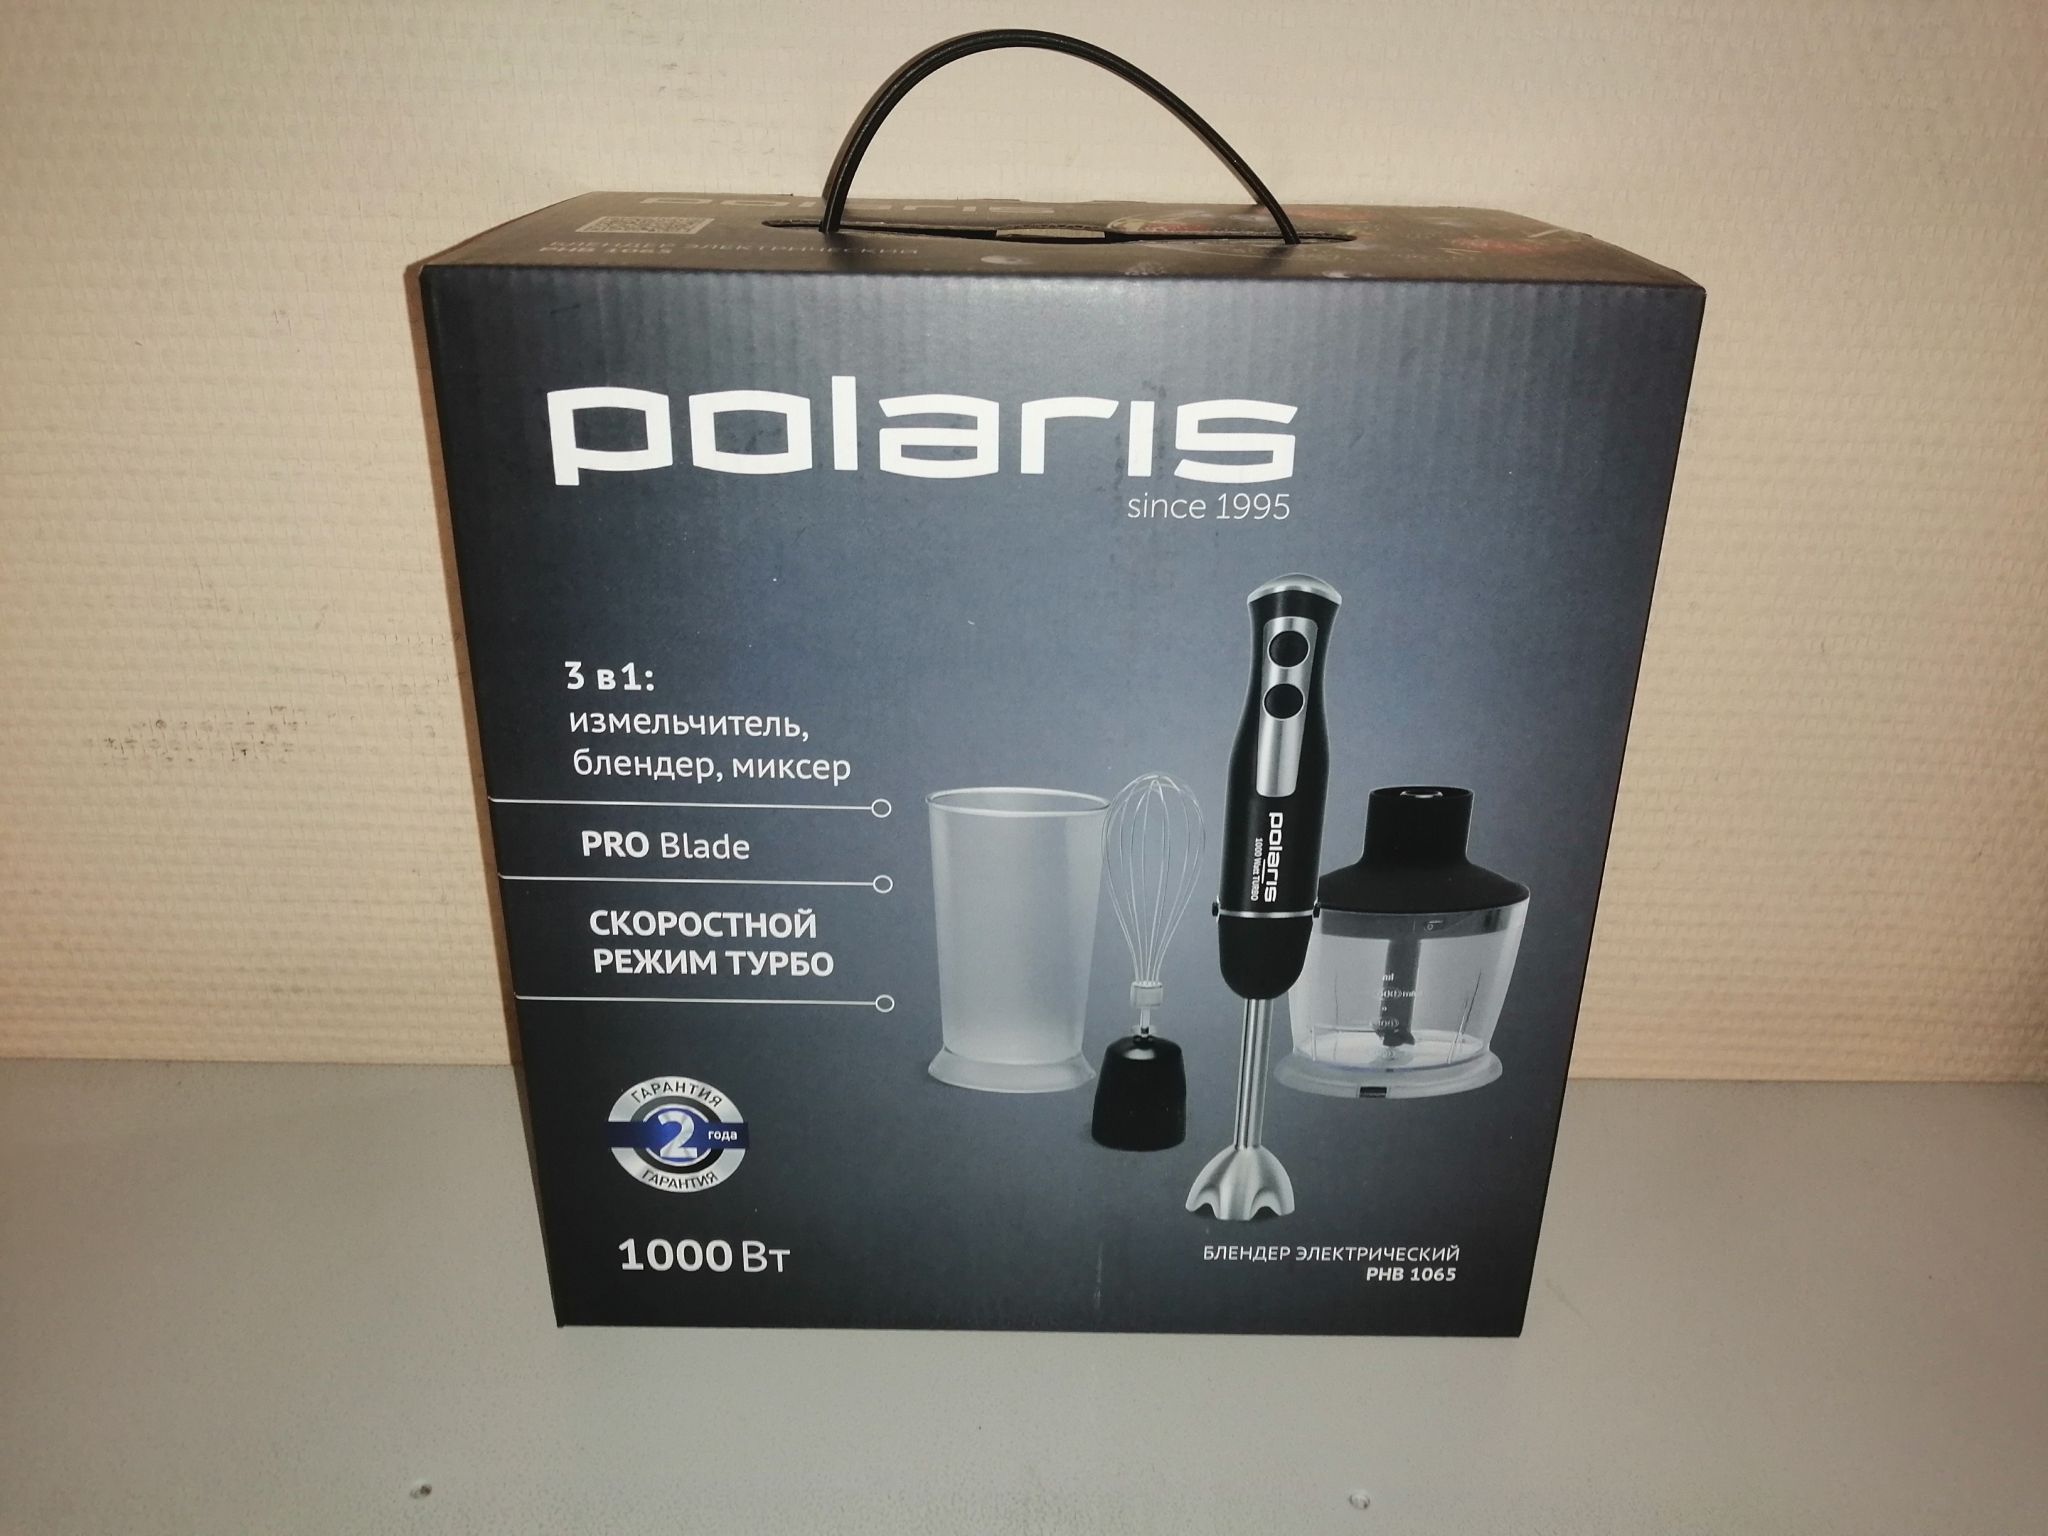 Polaris phb 1065. Блендер Polaris since 1995. Блендер Polaris since 1065. Блендер Polaris PHB 1065.